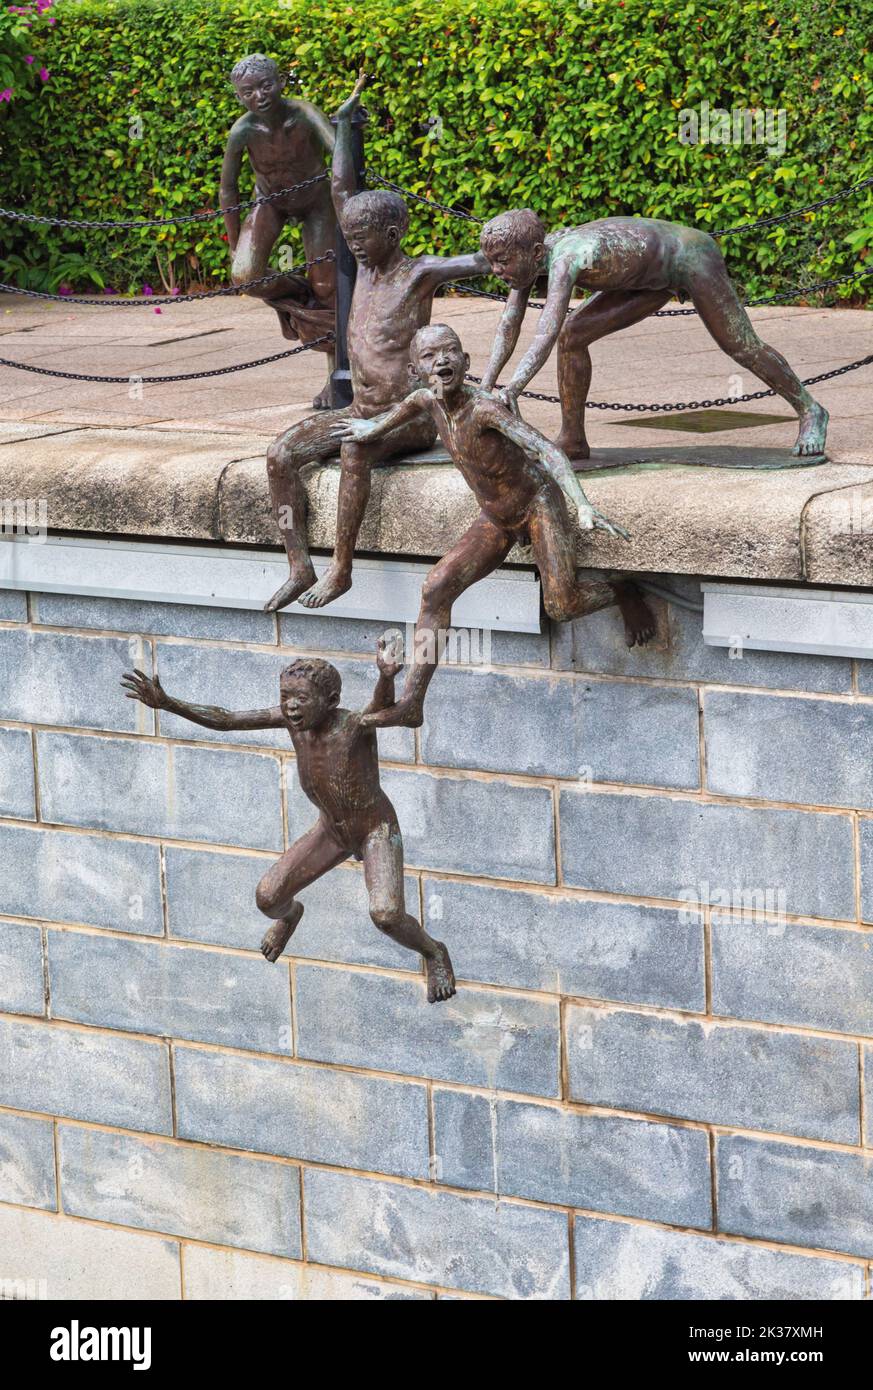 The First Generation, a bronze sculpture by Singaporean artist Chong Fah Cheong, born 1946. Republic of Singapore. Stock Photo